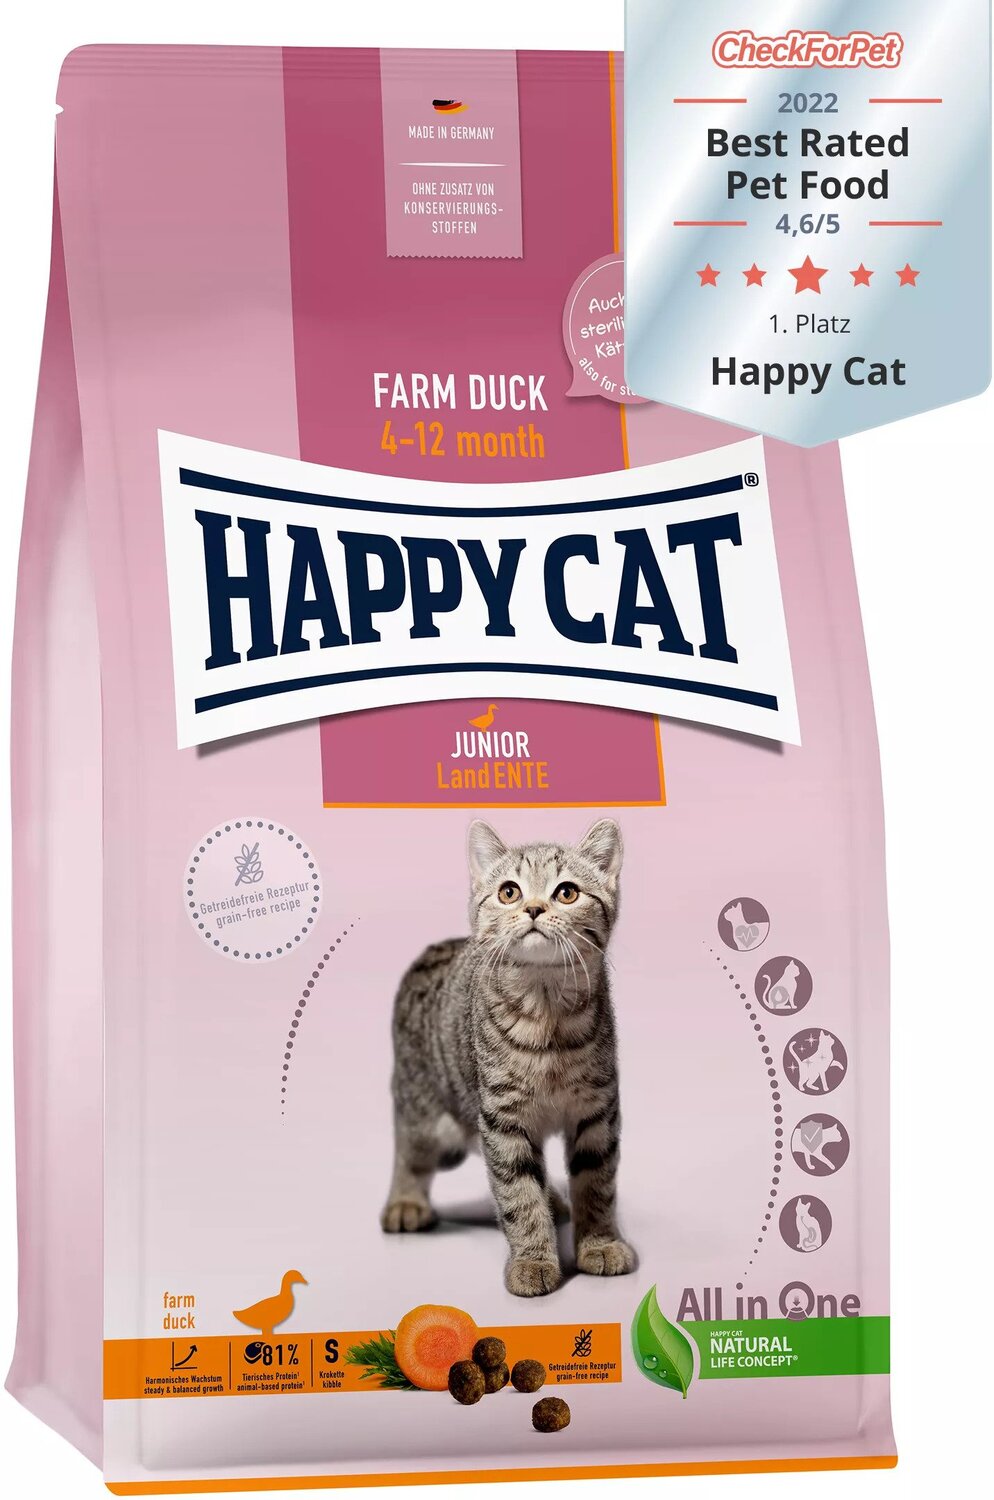 Happy Cat Junior 4-12 month Farm Duck Land Ente Grain Free